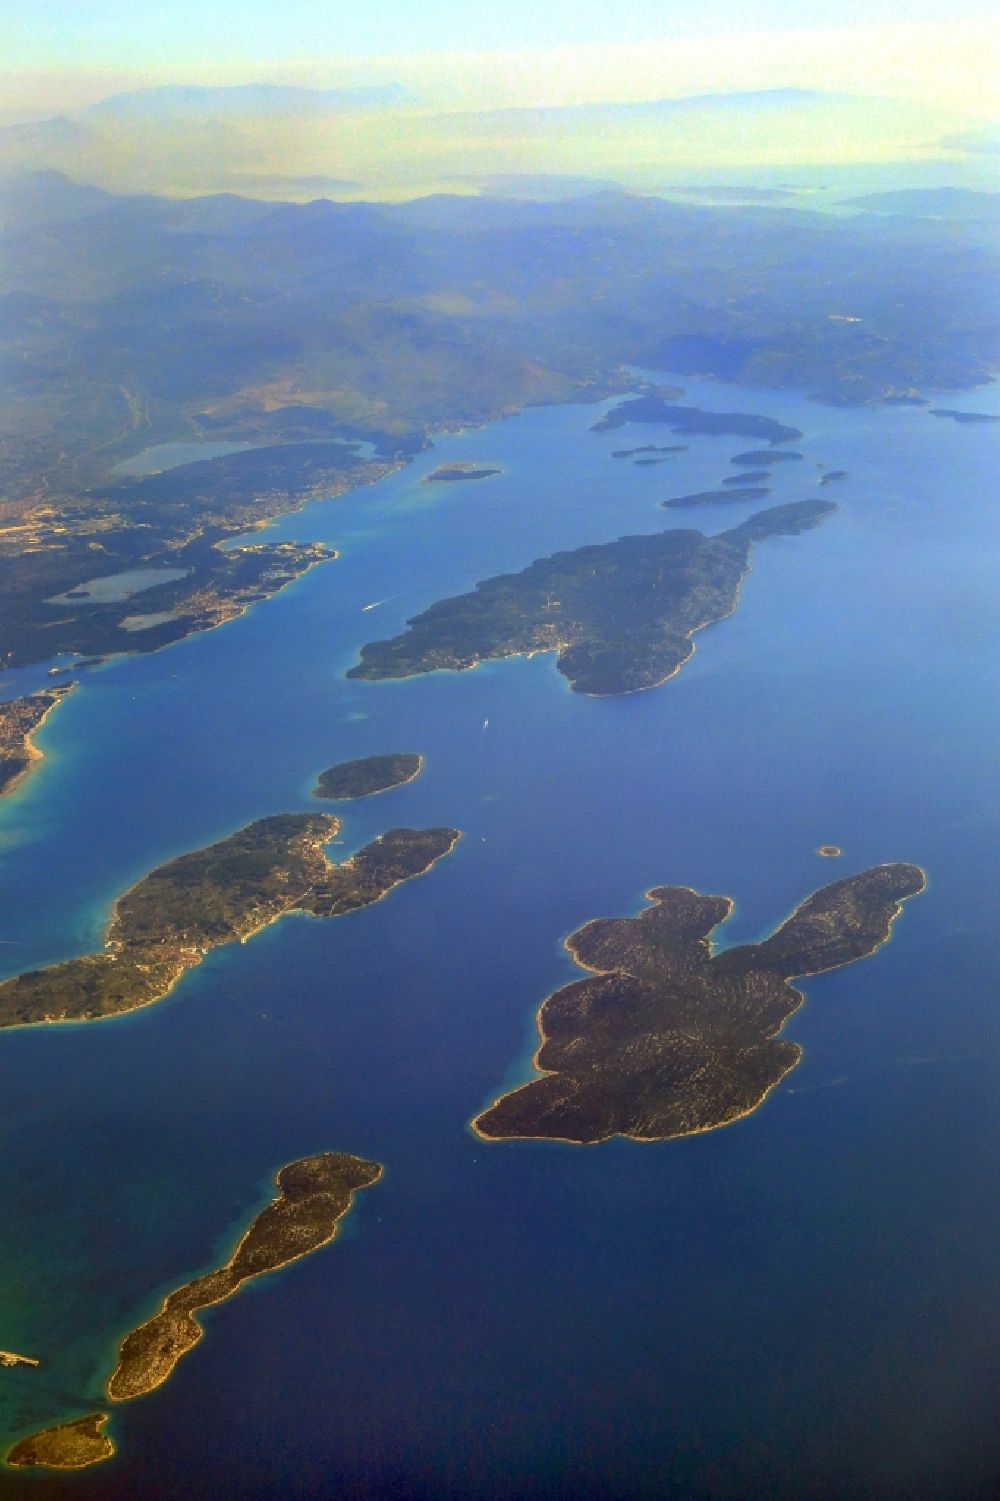 Prvic Sepurine von oben - Adria Insel Tijat Prvic im Adriatischen Meer in Prvic Sepurine in Sibensko-kninska zupanija, Kroatien